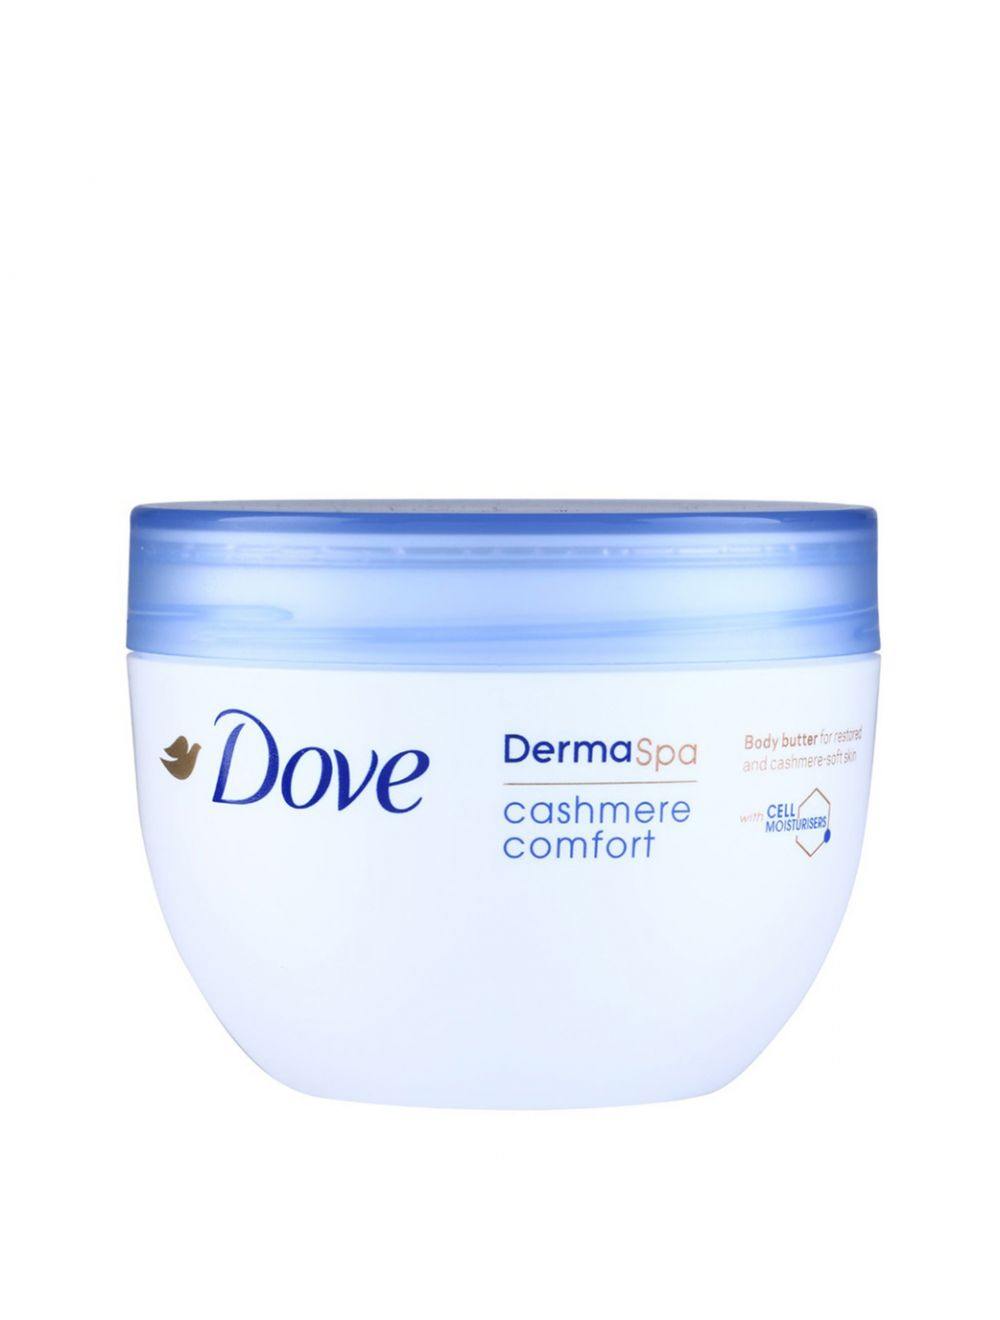 Dove DermaSpa Cashmere Comfort Body Butter (300ml) - Niram